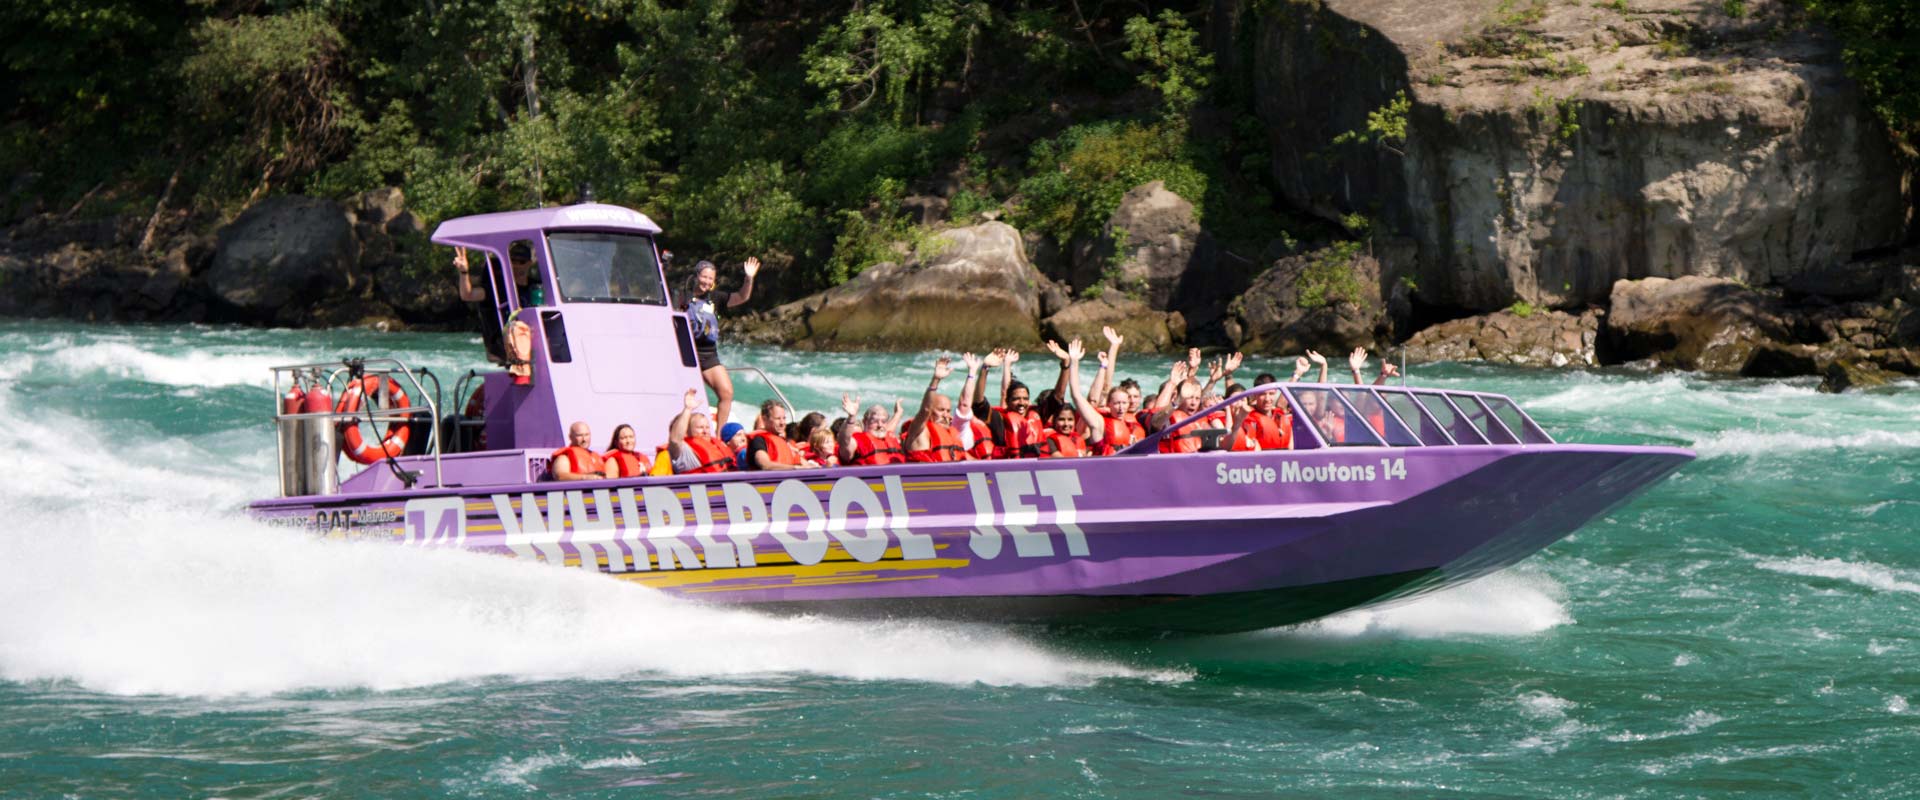 Niagara boat jet whirlpool falls tour